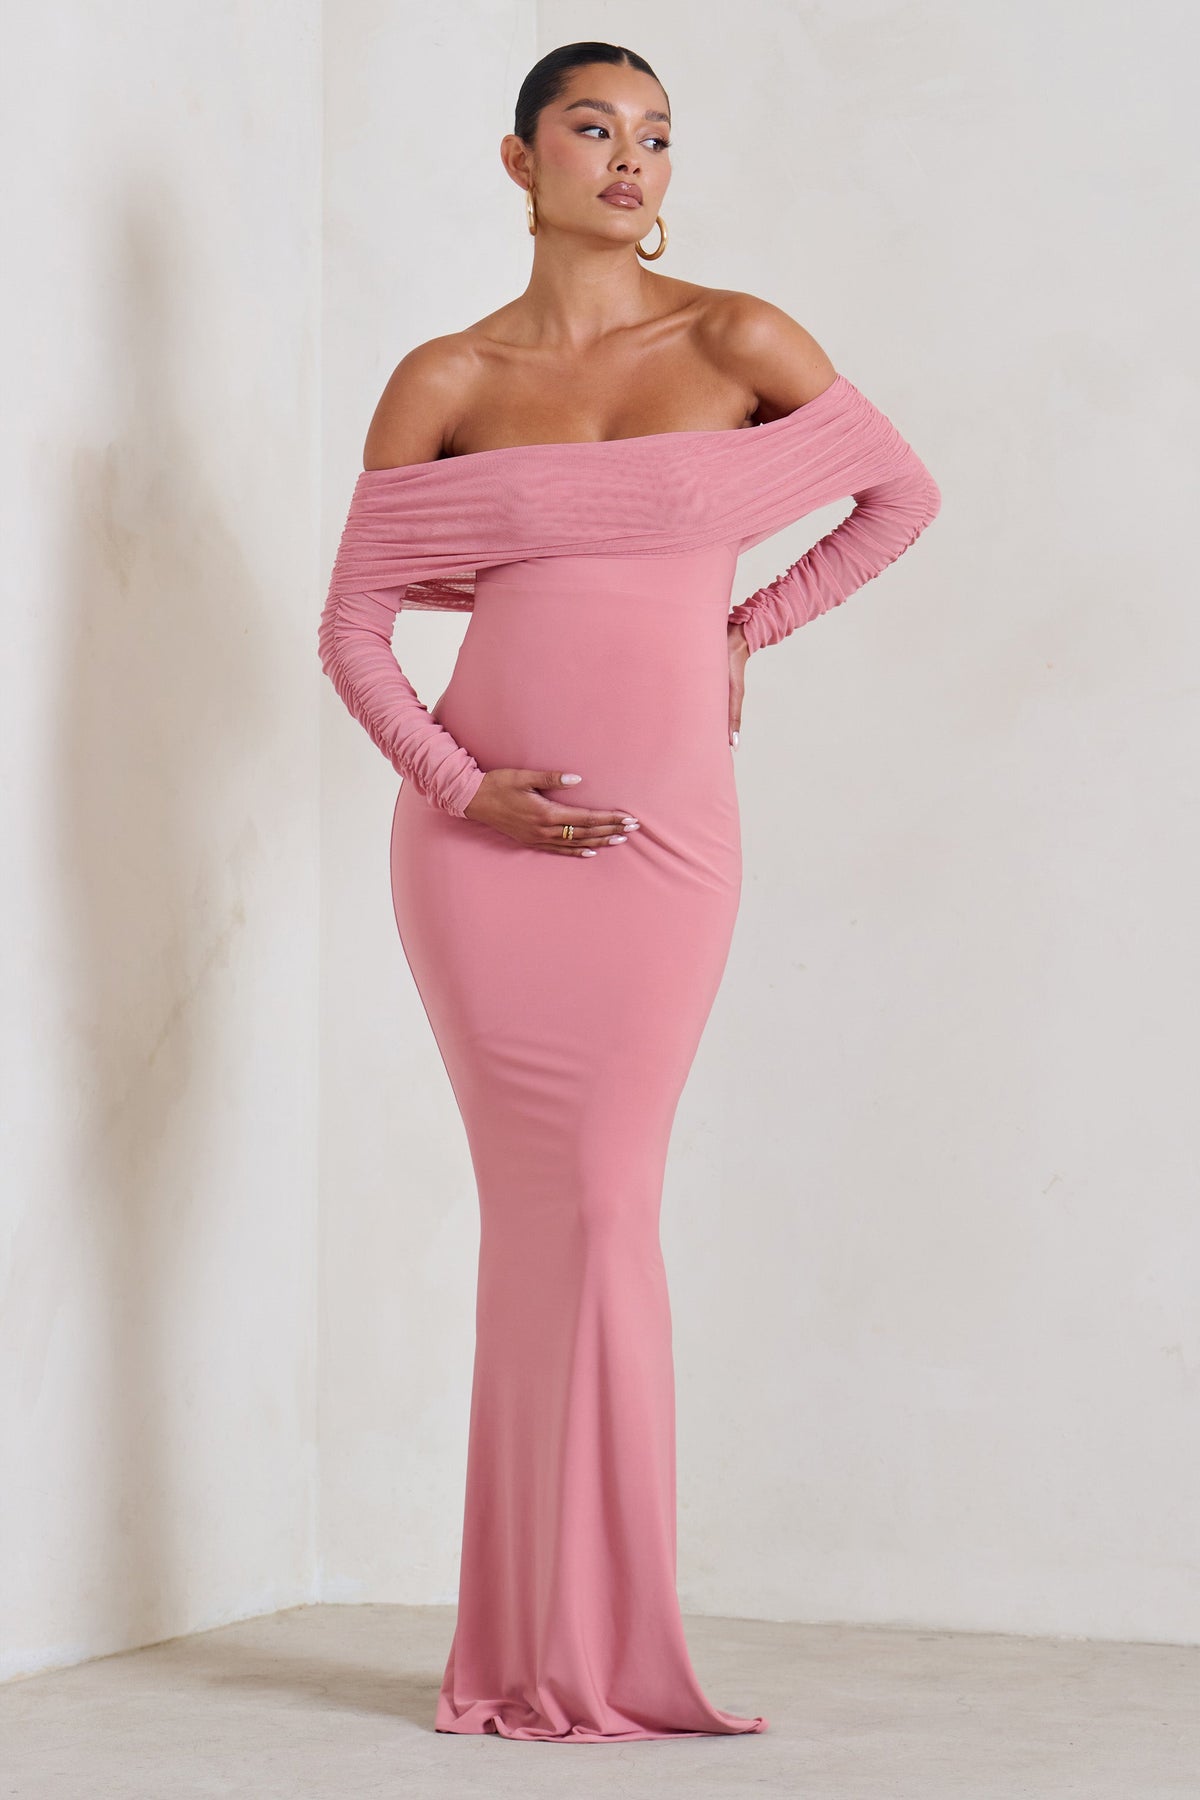 Blush Pink Midi Short Lace Overlay Dress With 3/4 Length Sleeve - Le Parole